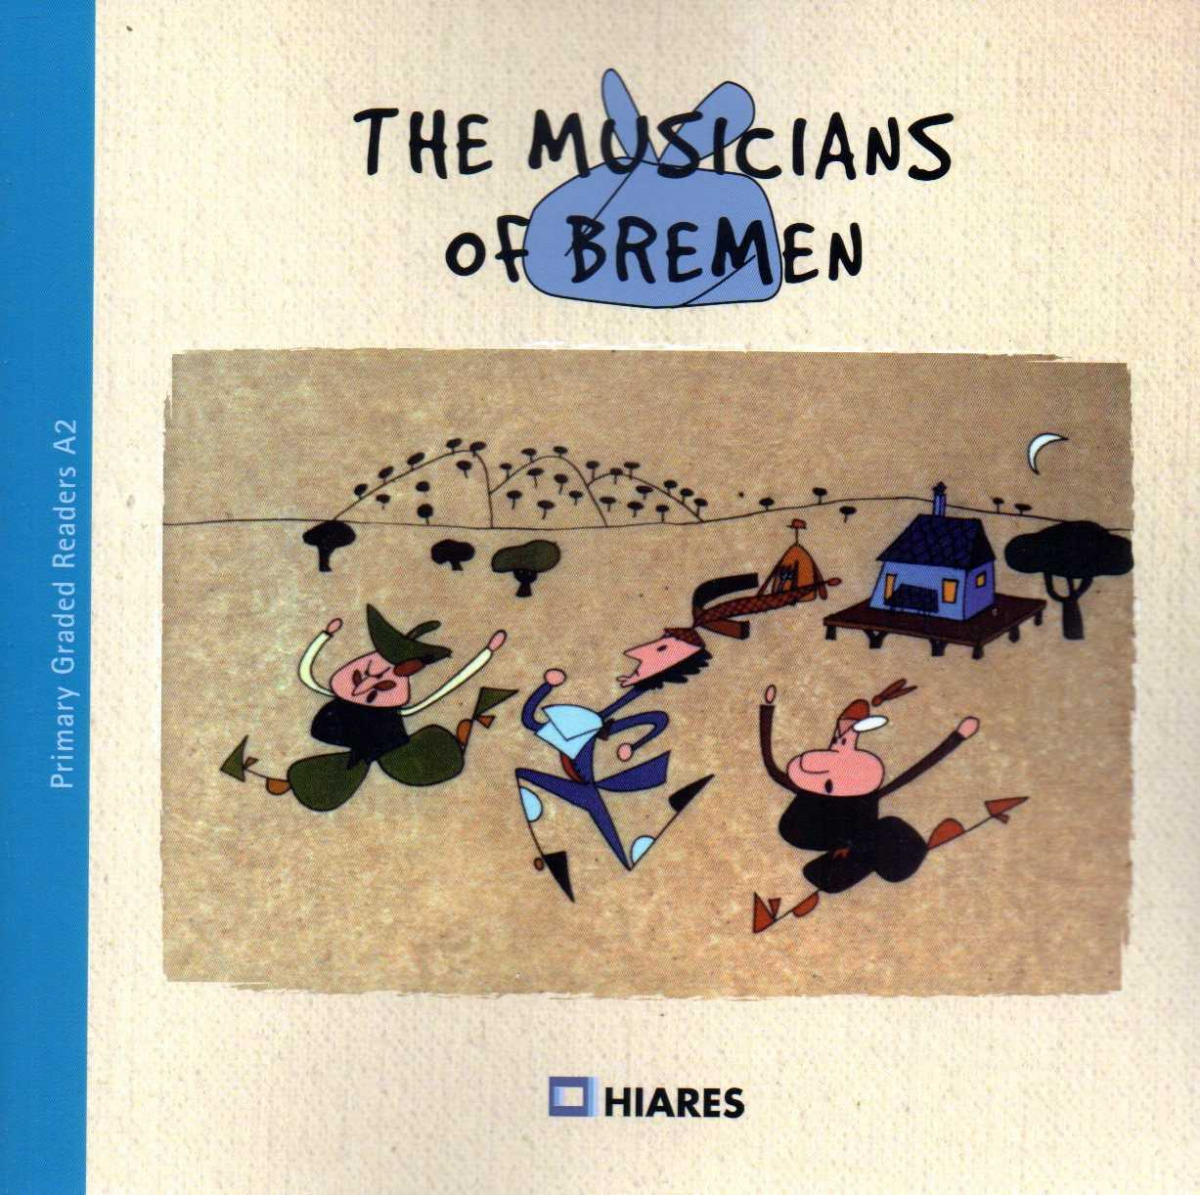 The musicians of bremen - Aa.Vv.